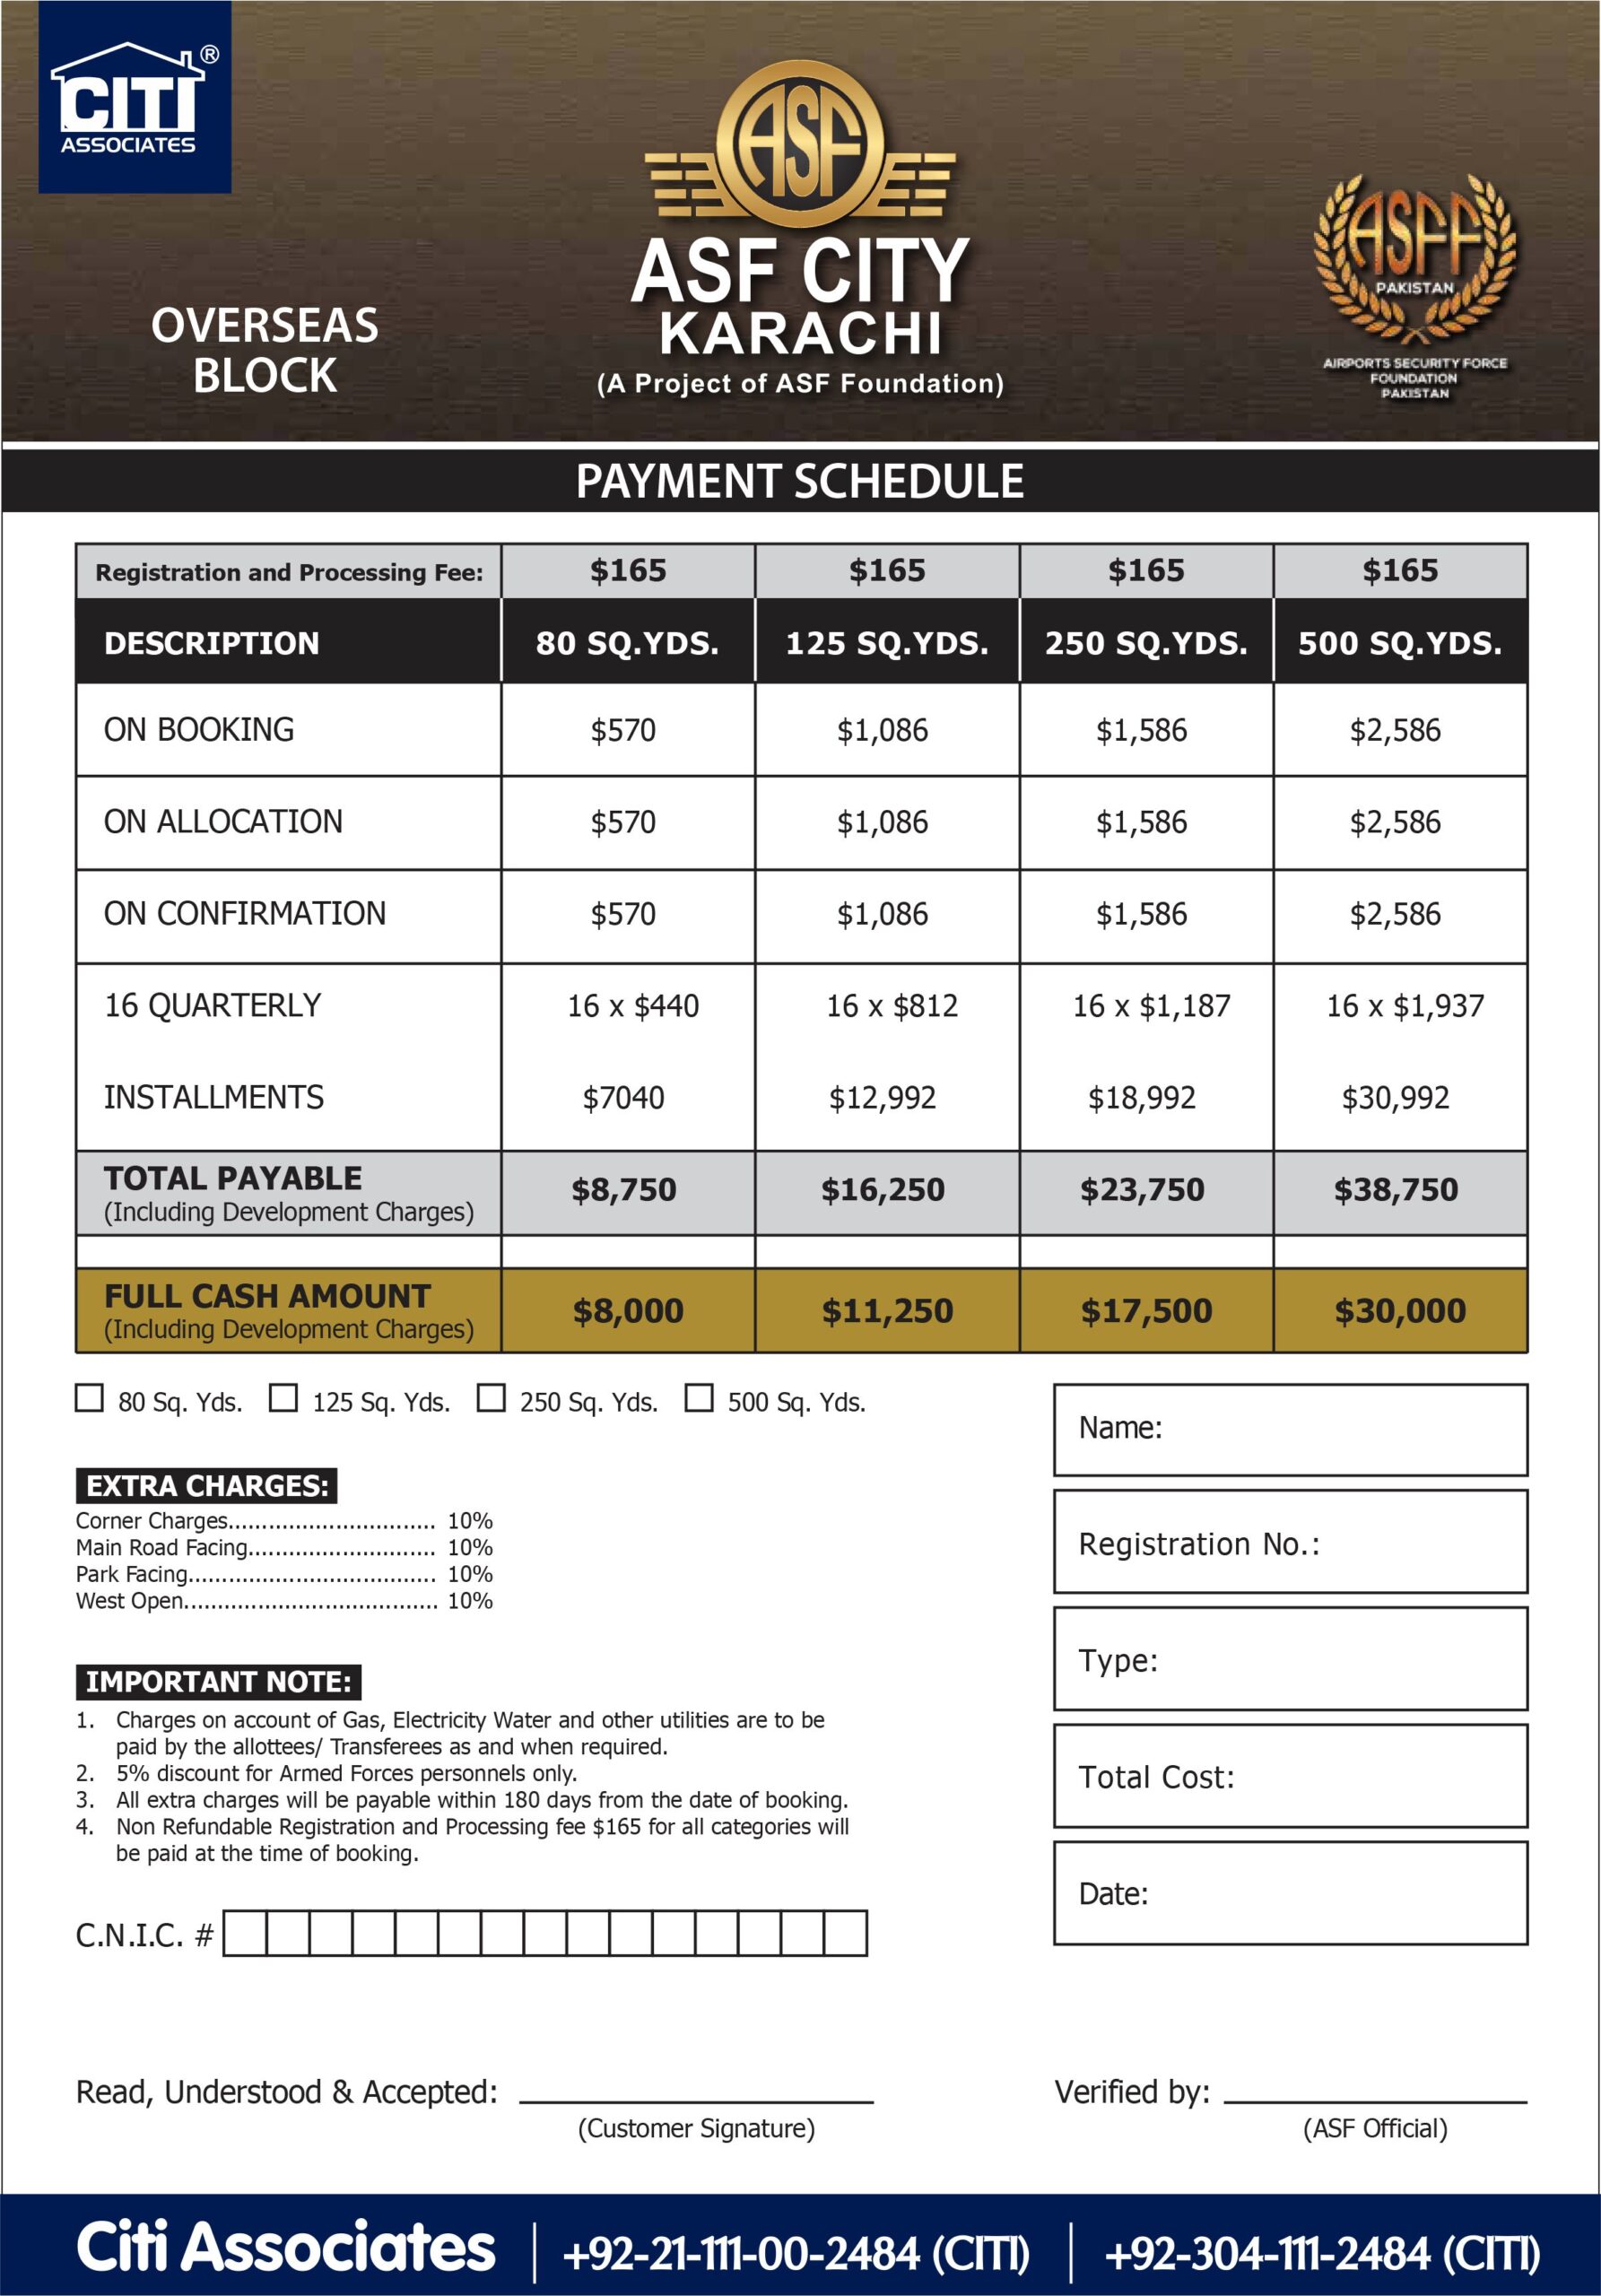 ASF-City-Karachi-Overseas-Payment-Schedule-1